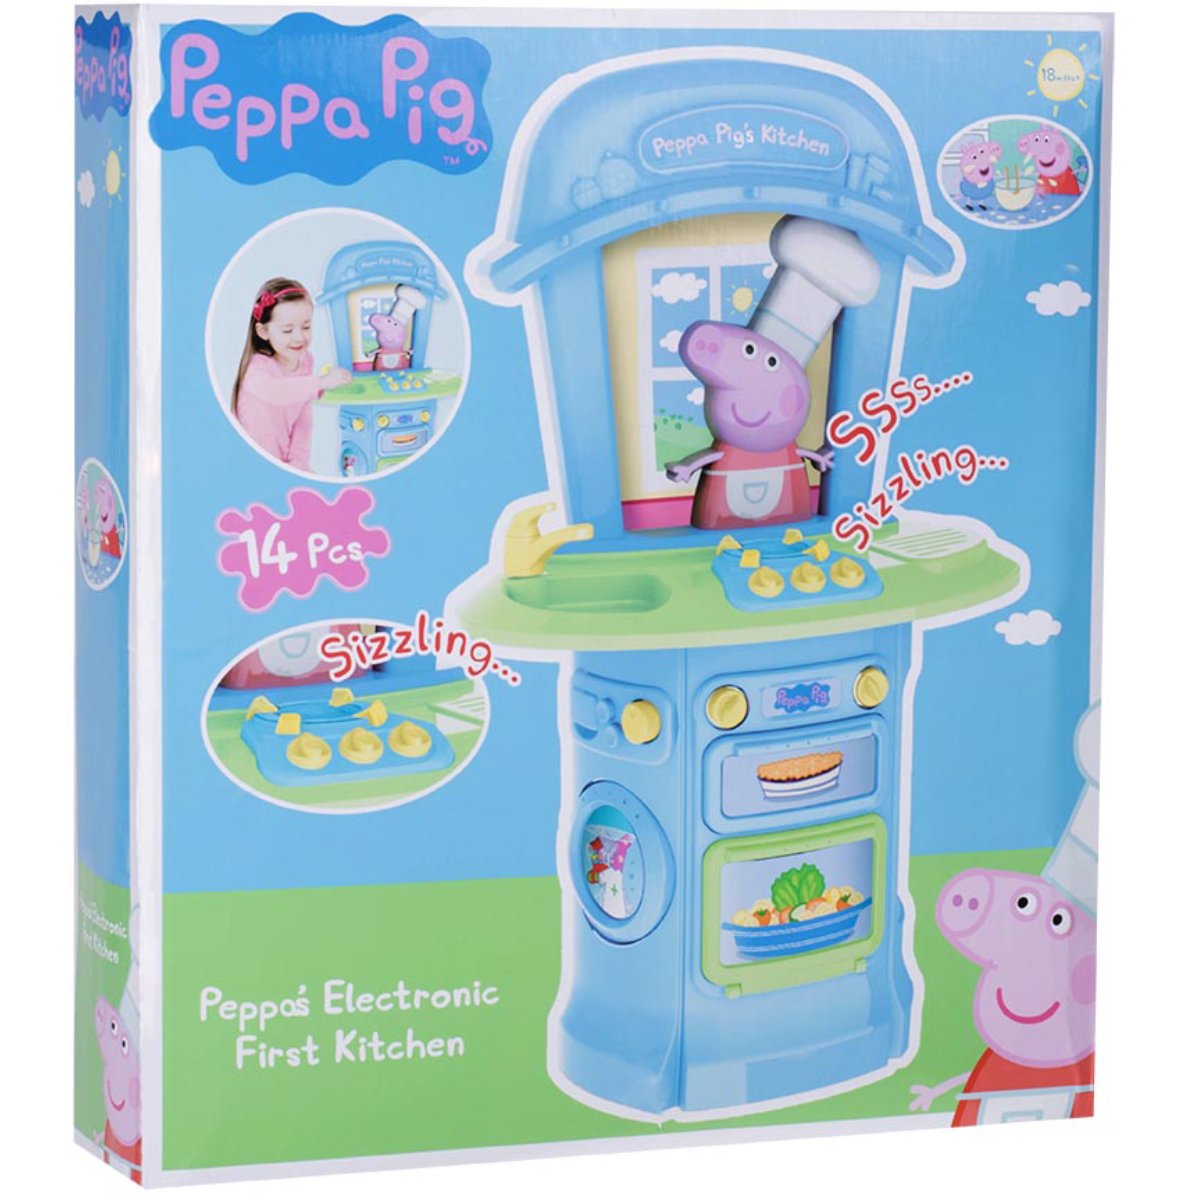 Prima mea bucatarie, Peppa Pig, 14 piese bucatarie